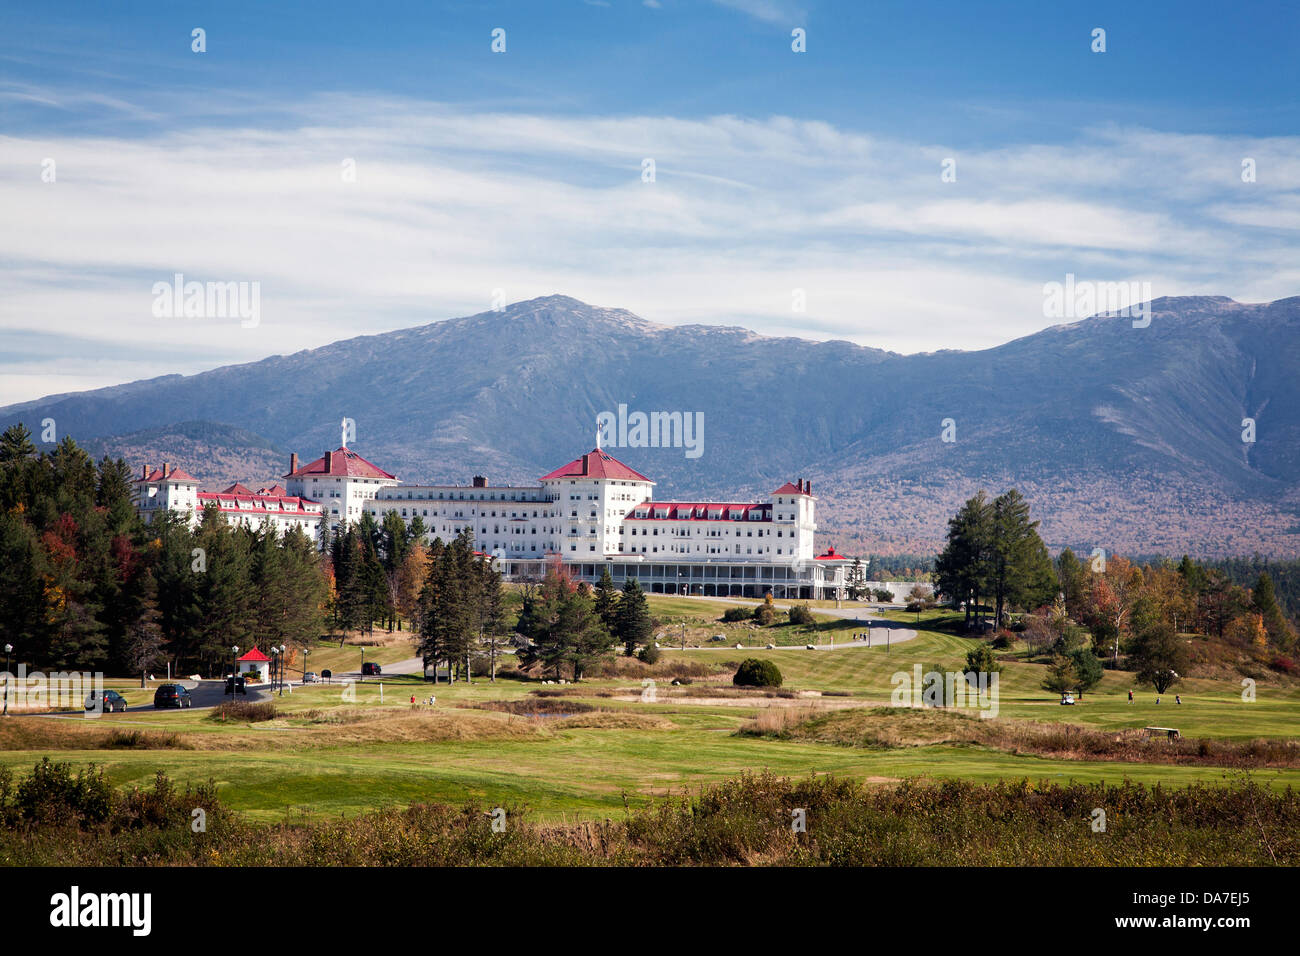 Omni Mount Washington Resort at Bretton Woods New Hampshire Stock Photo